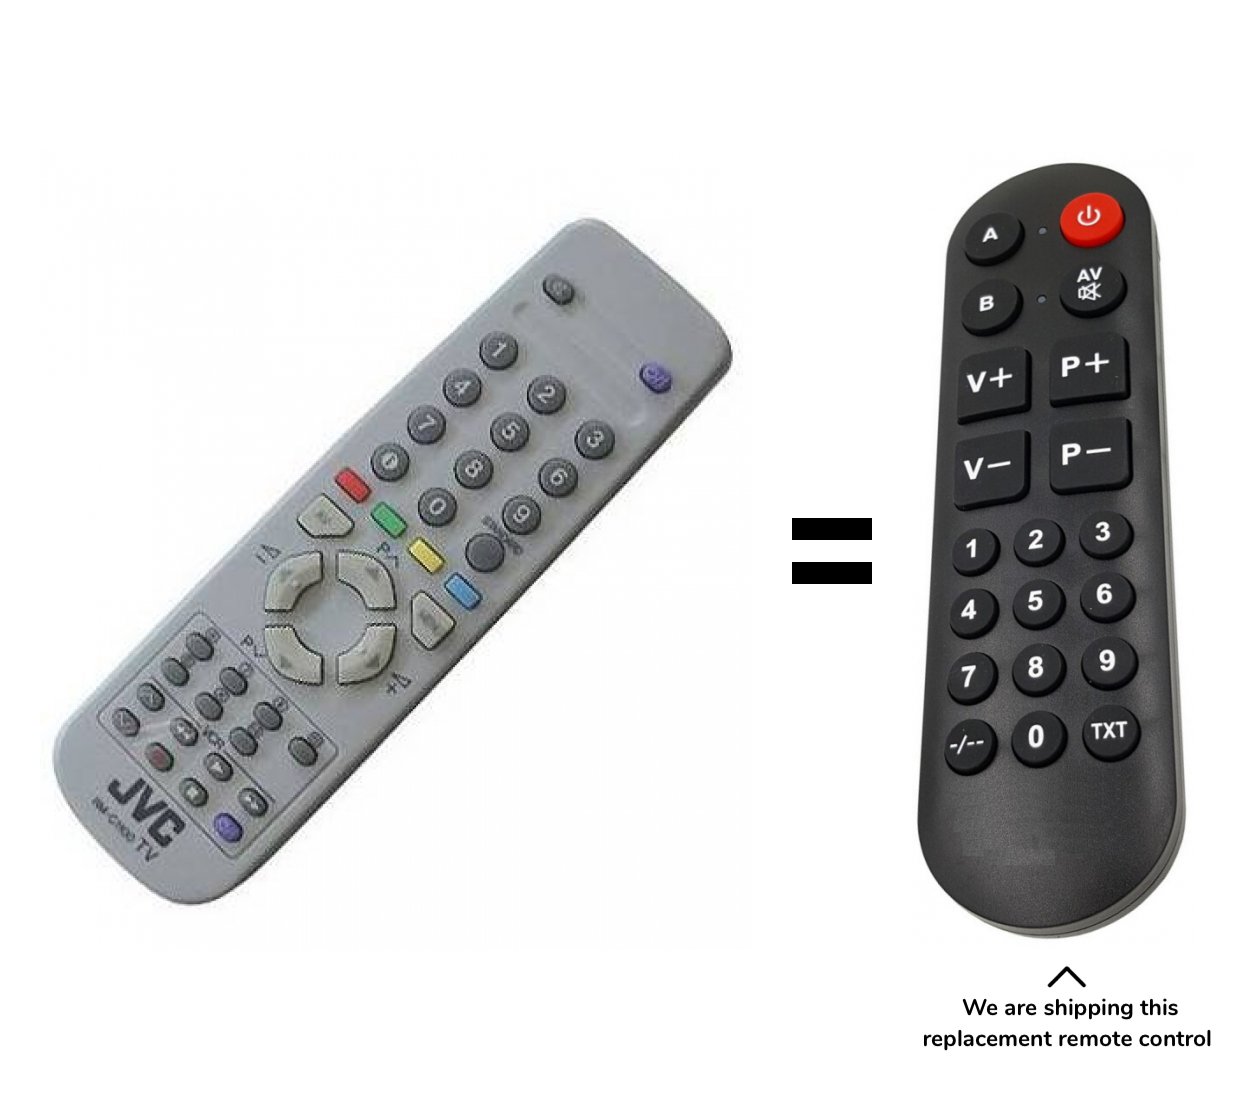 JVC RM-C1100 remote control for seniors